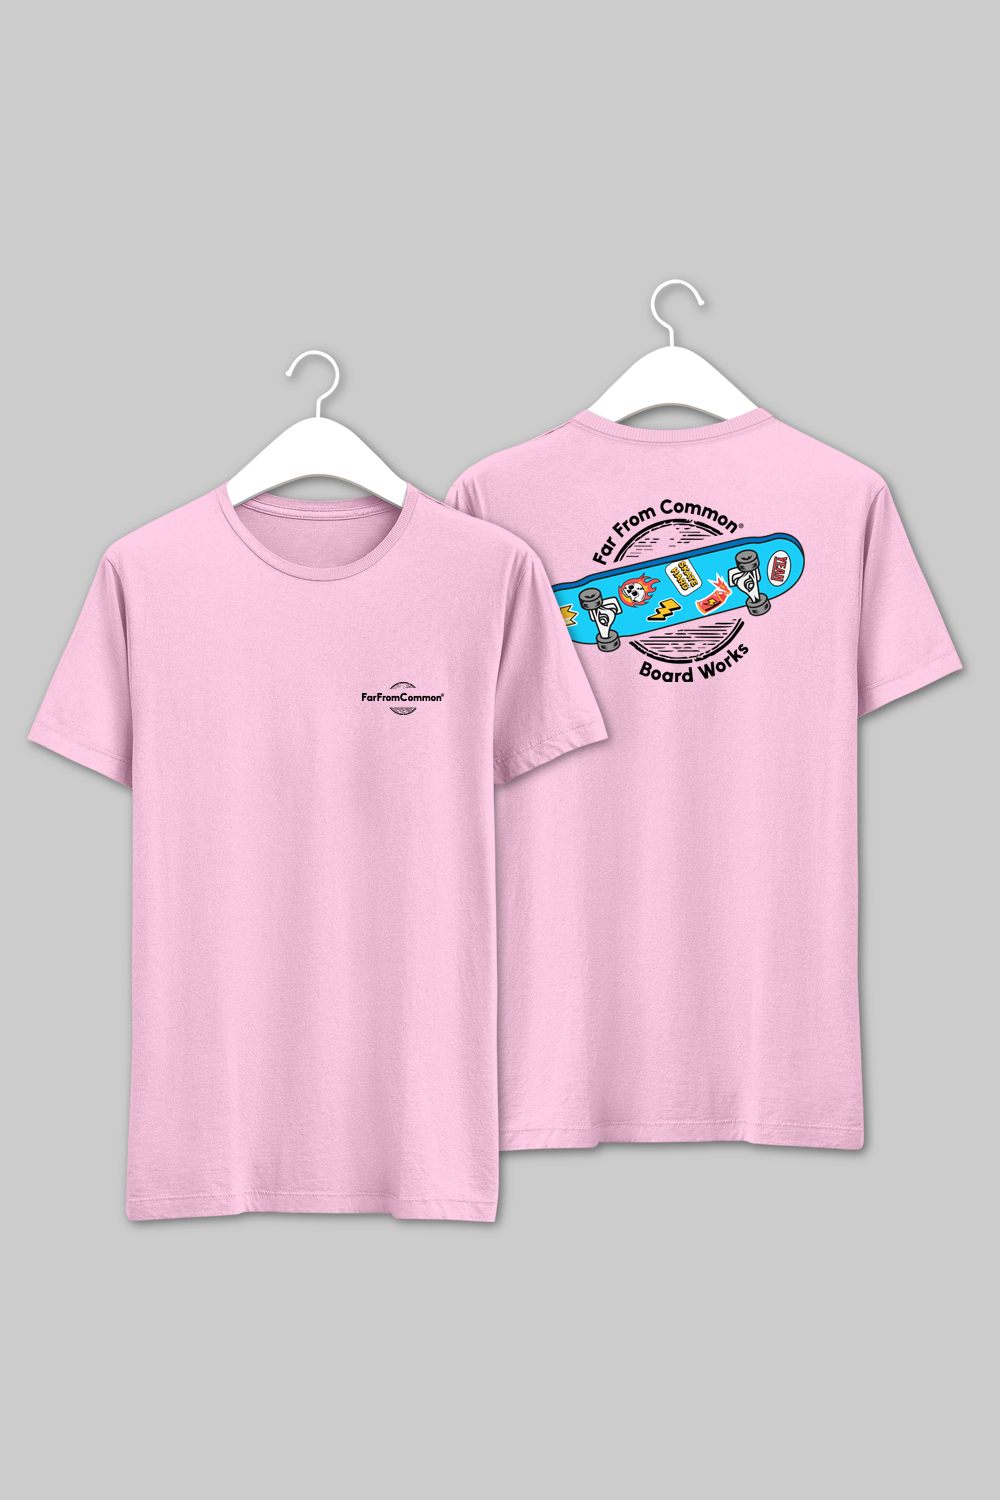 Skateboard Works Unisex Light Pink T-shirt